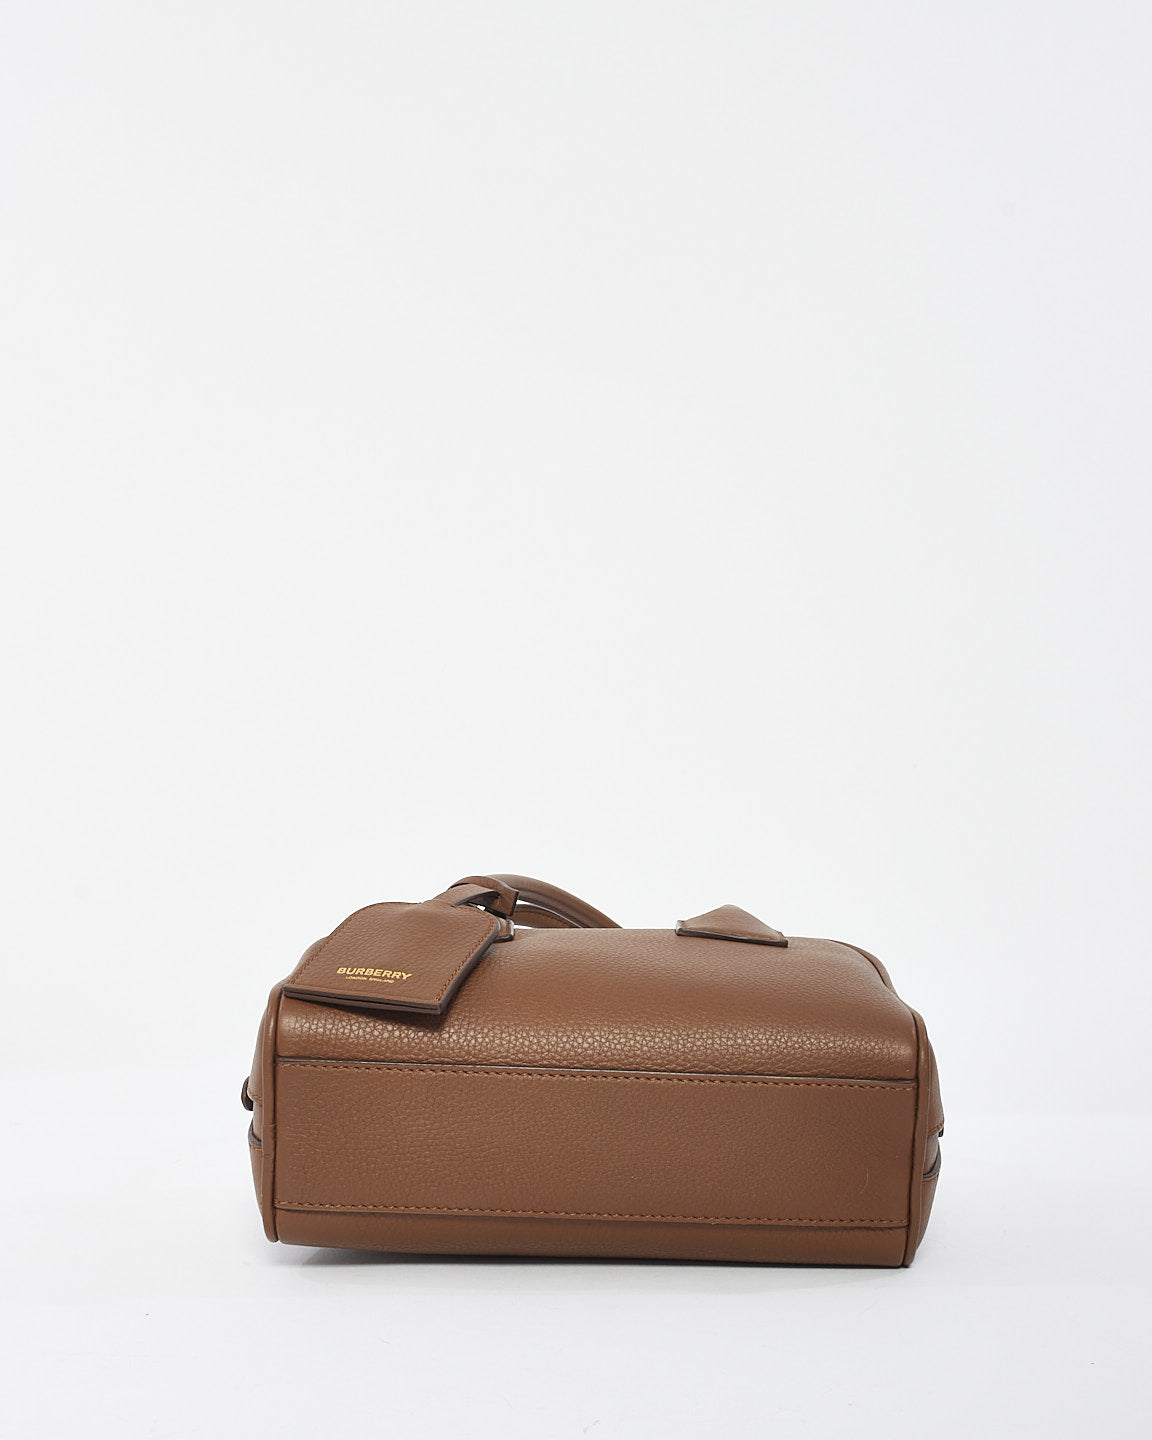 Burberry Brown Leather Mini Half Cube Tote Bag